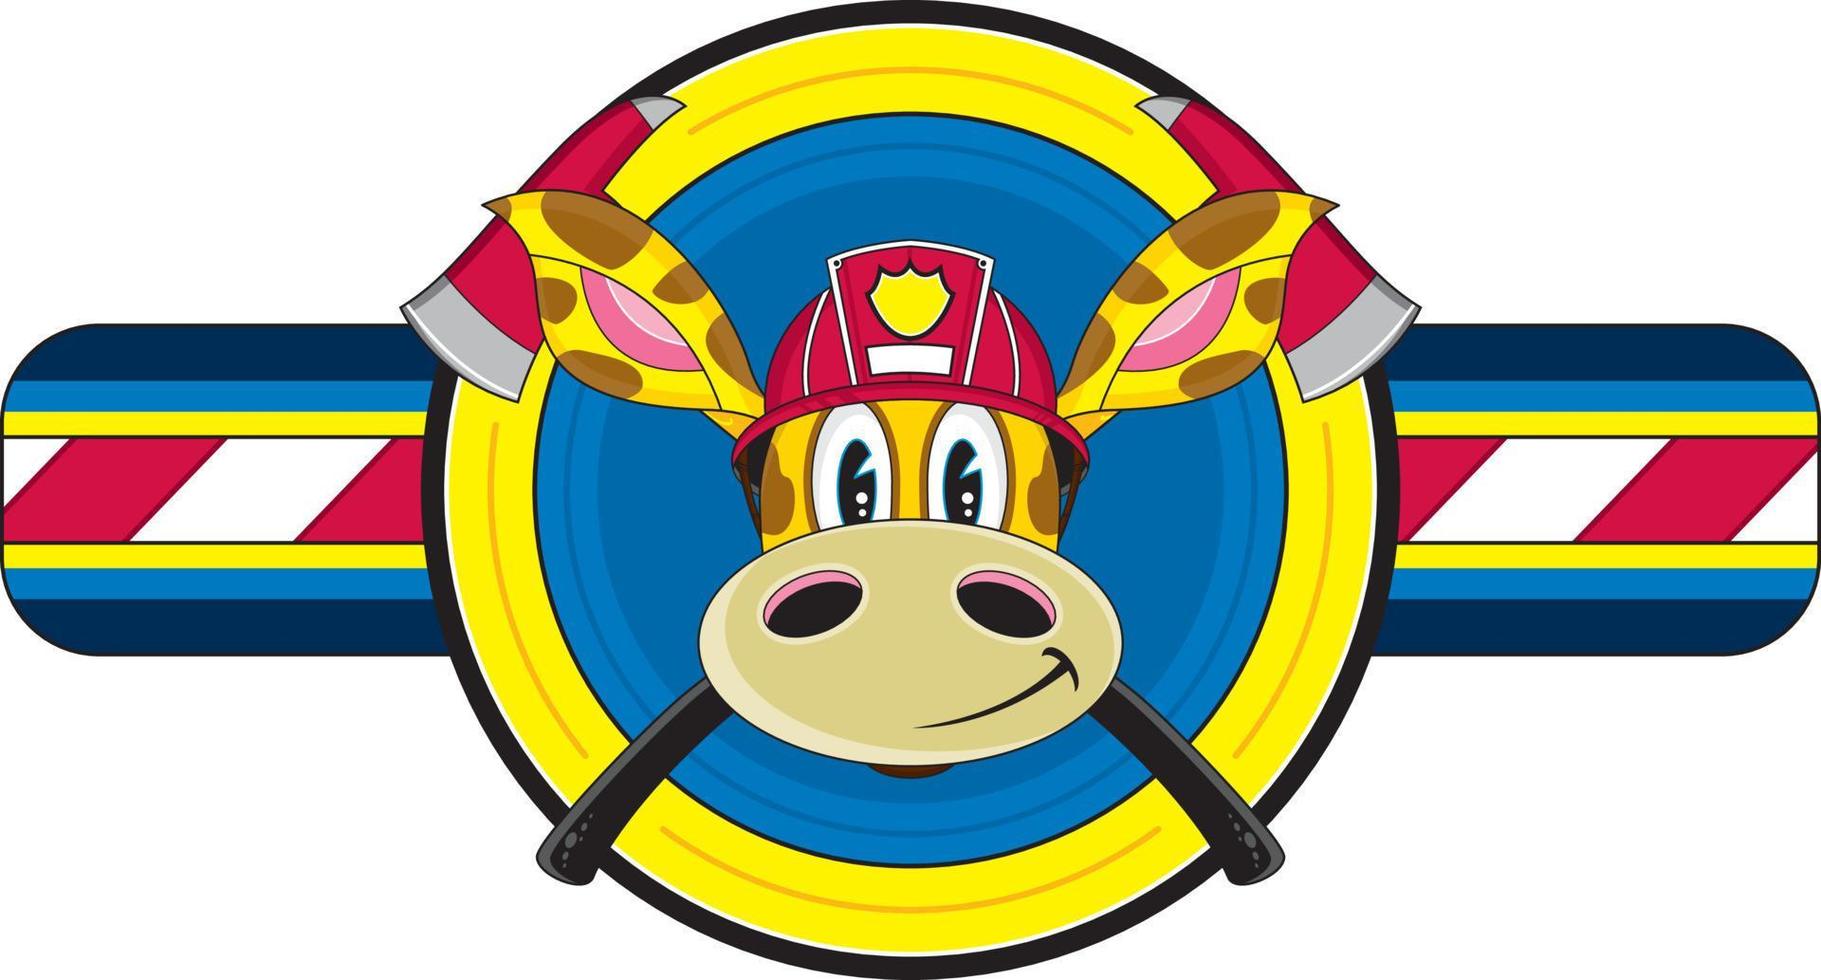 süß Karikatur Giraffe Feuerwehrmann Charakter mit gekreuzt Achsen vektor